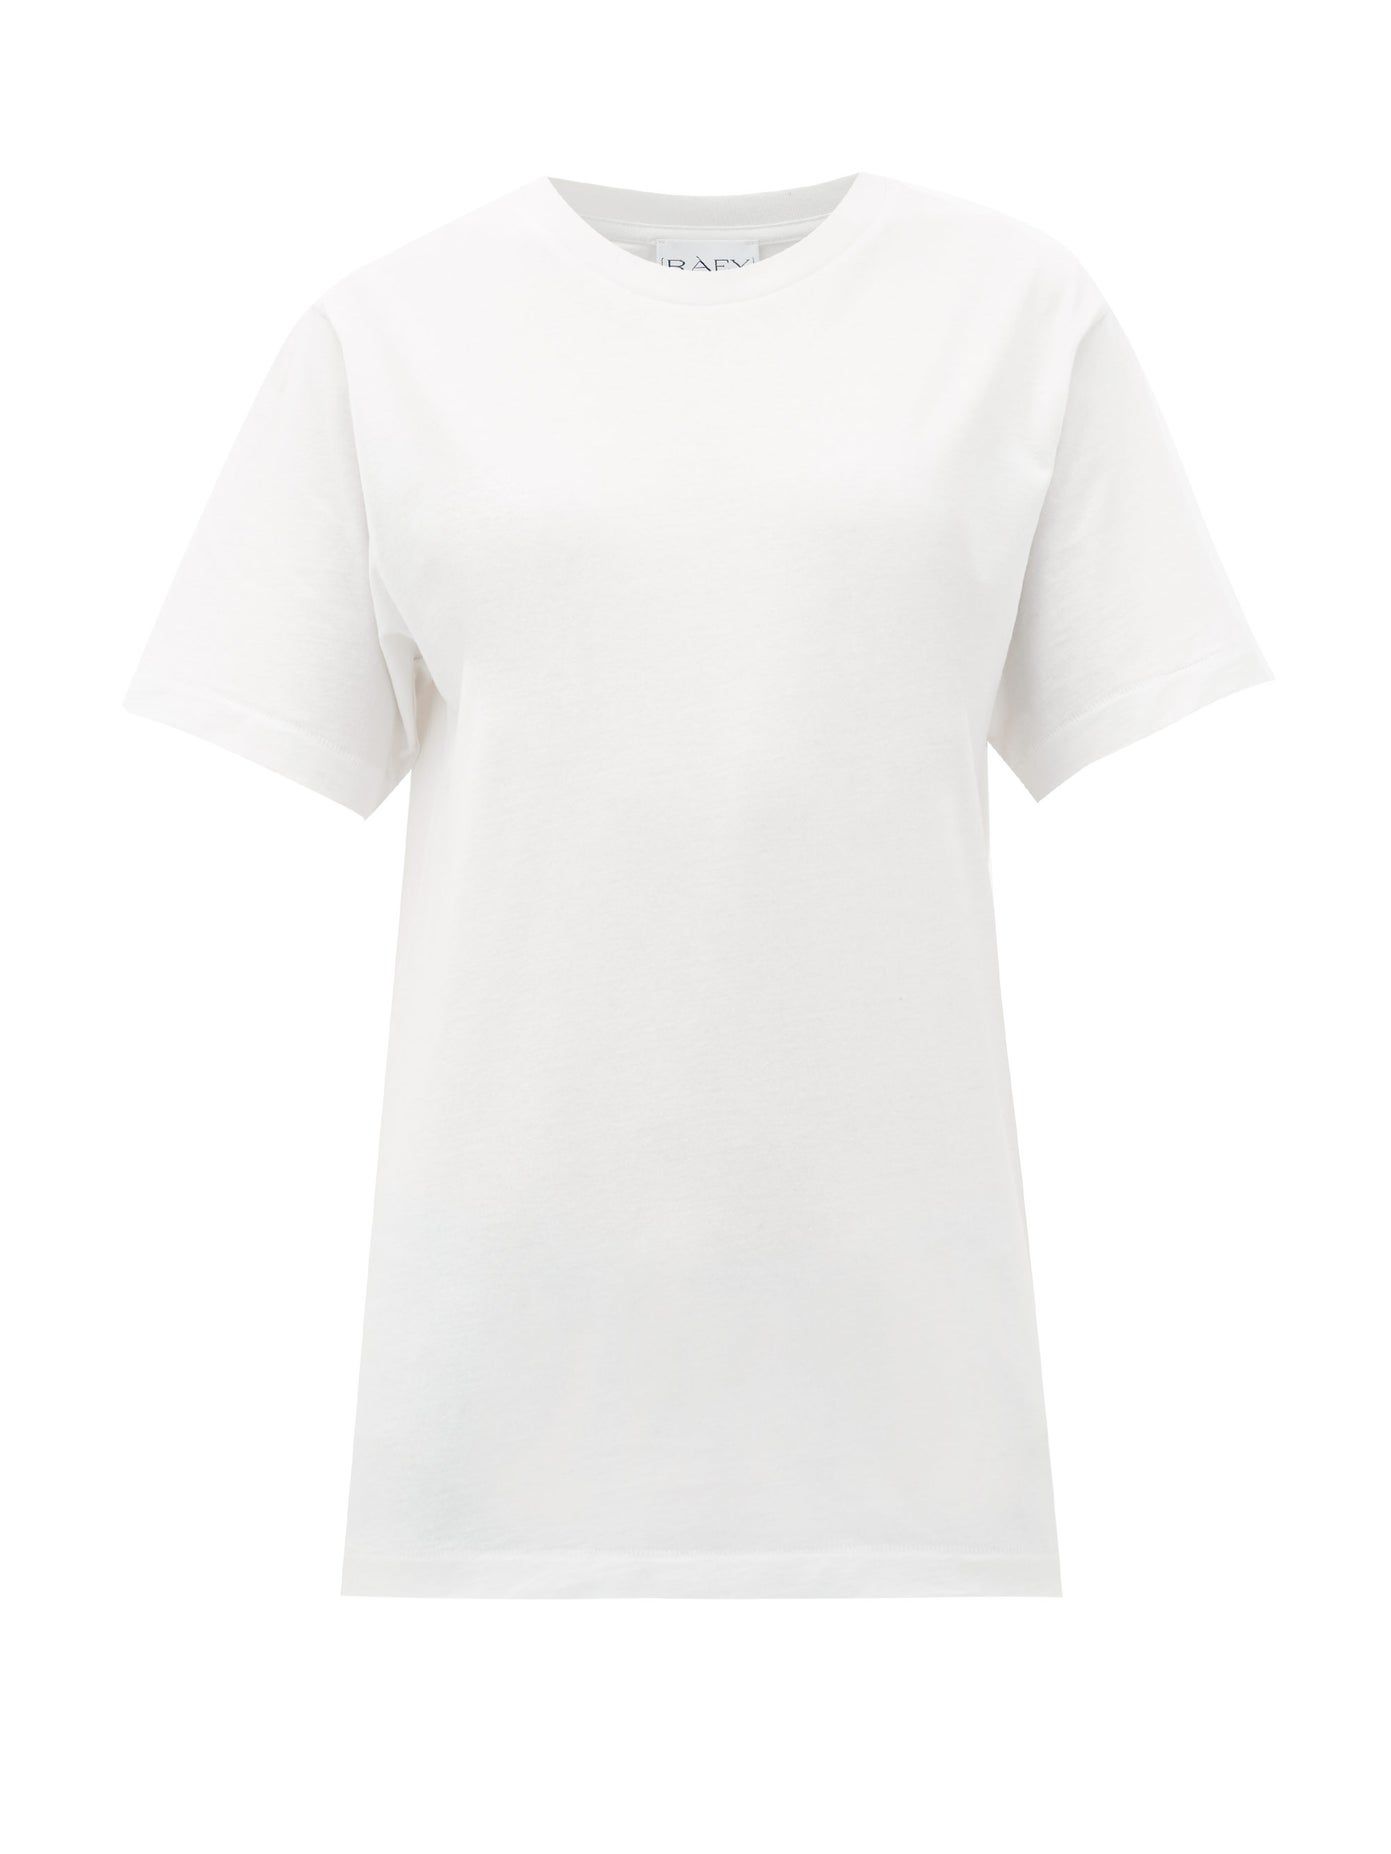 thick white t shirt